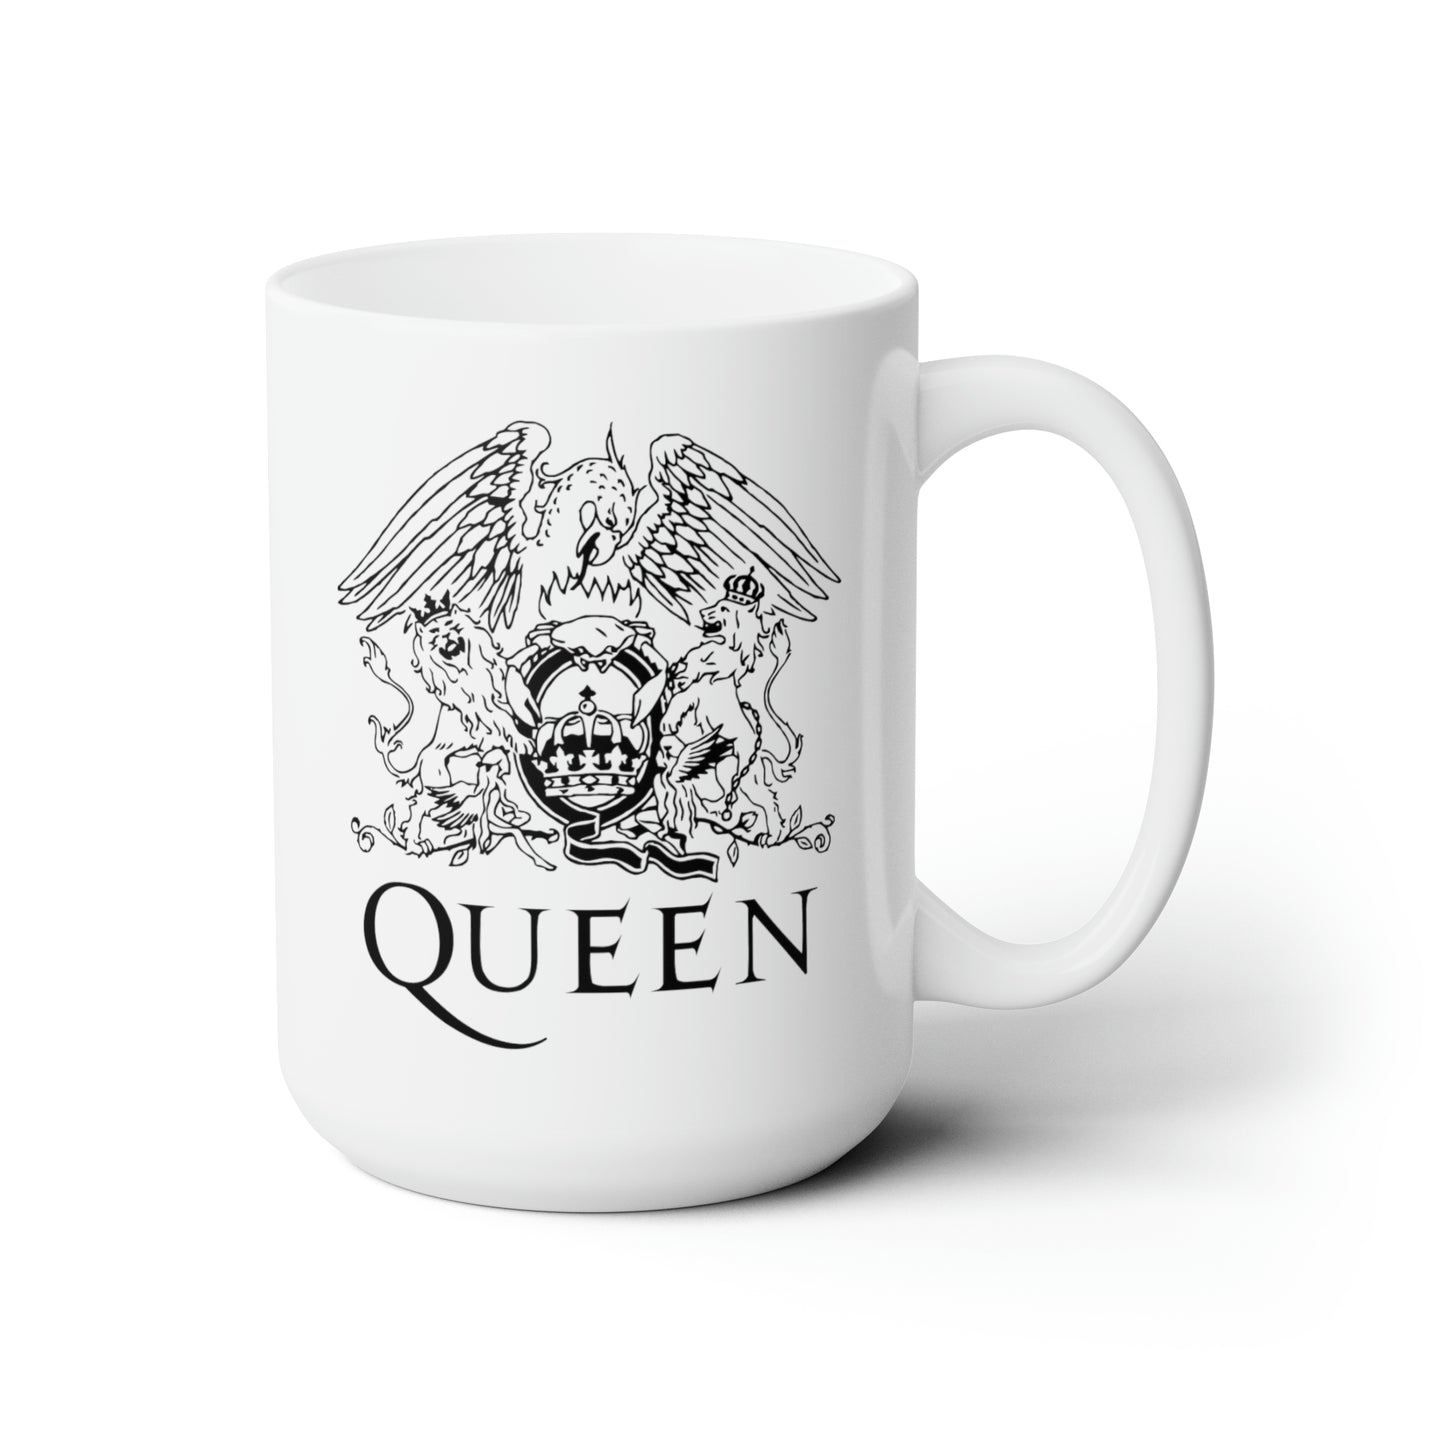 Queen Coffee Mug - Double Sided White Ceramic 15oz by TheGlassyLass.com